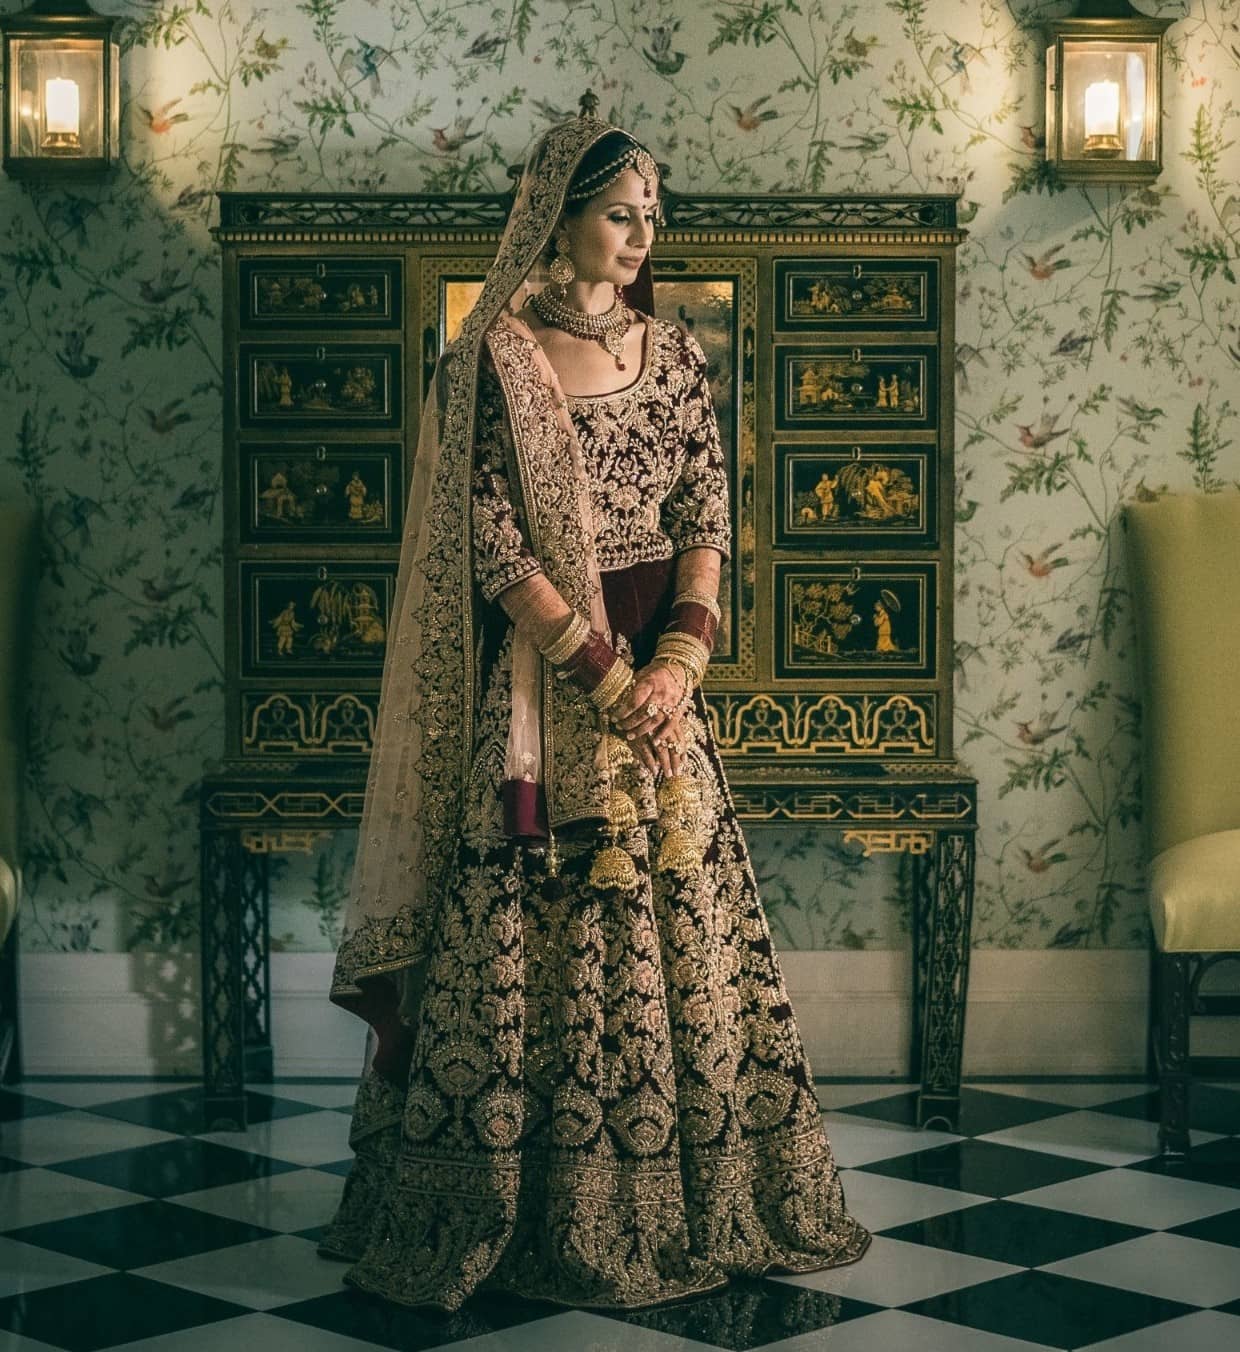 Punjabi bride wearing wine colored bridal lehenga with golden zari and thread work